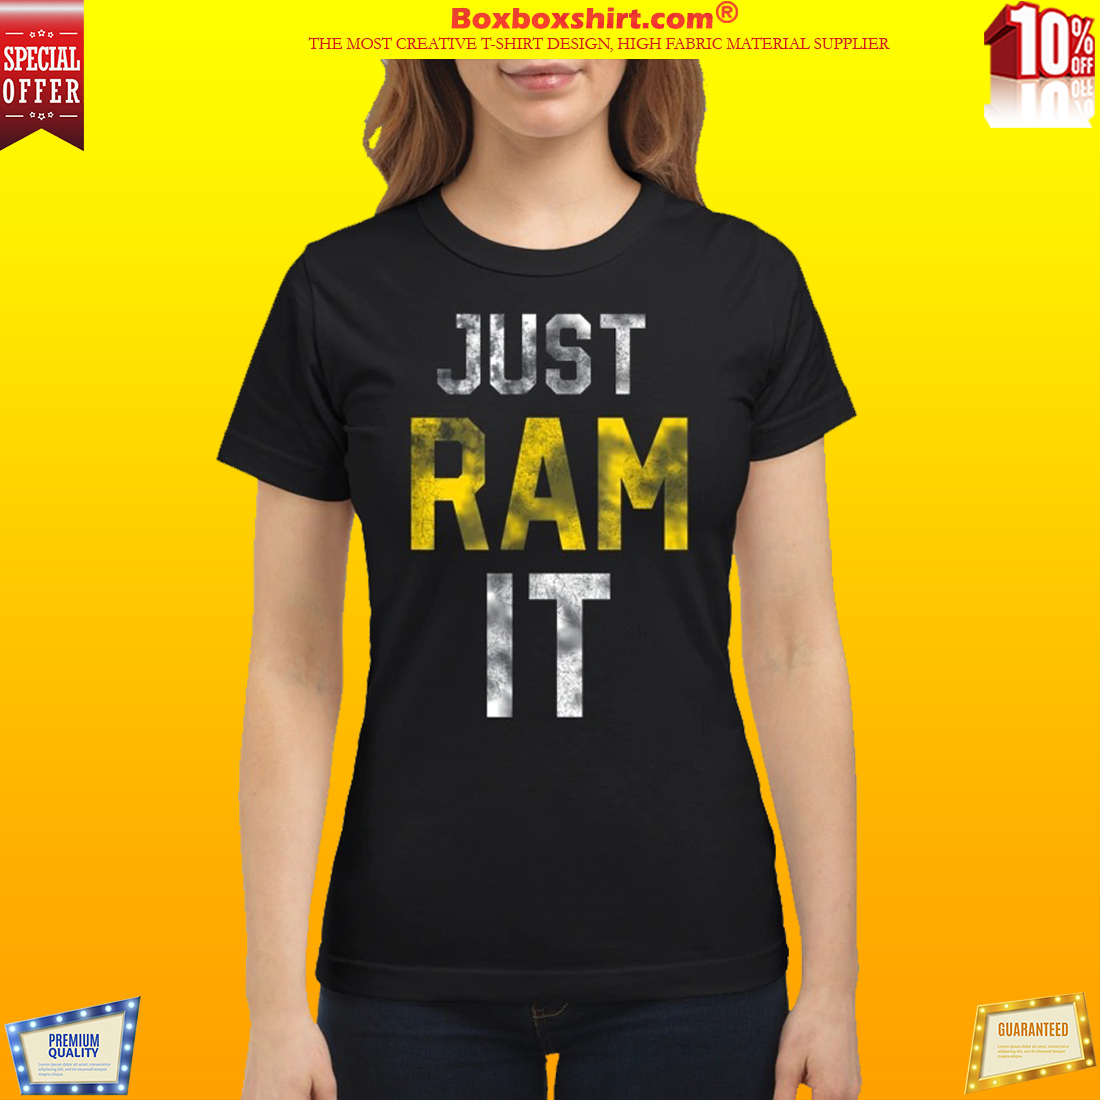 Just ram it classic shirt